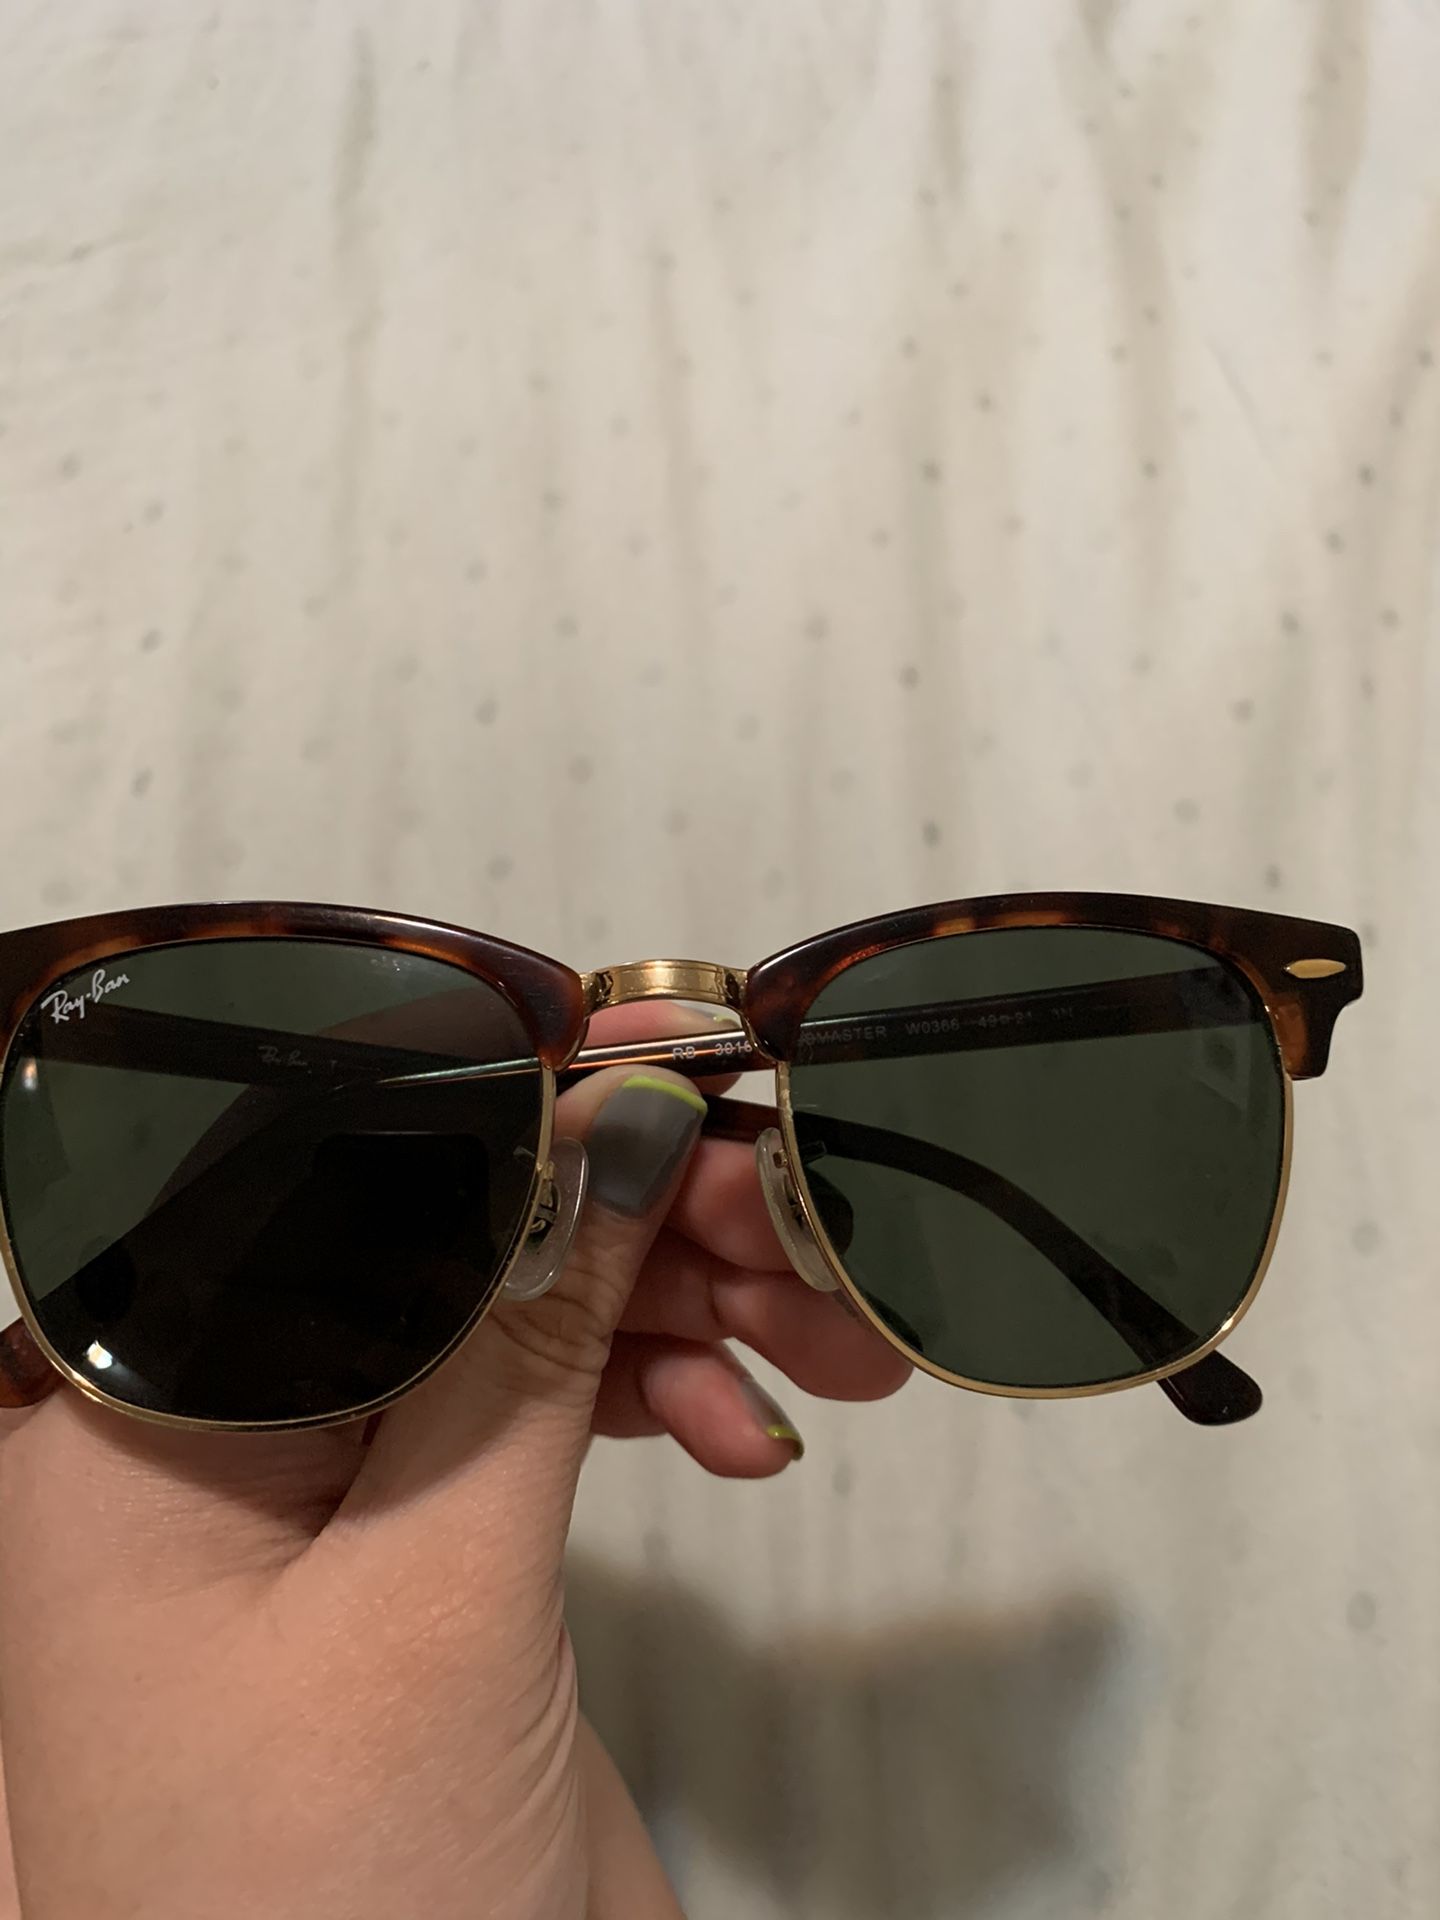 Ray Ban Club Master sunglasses